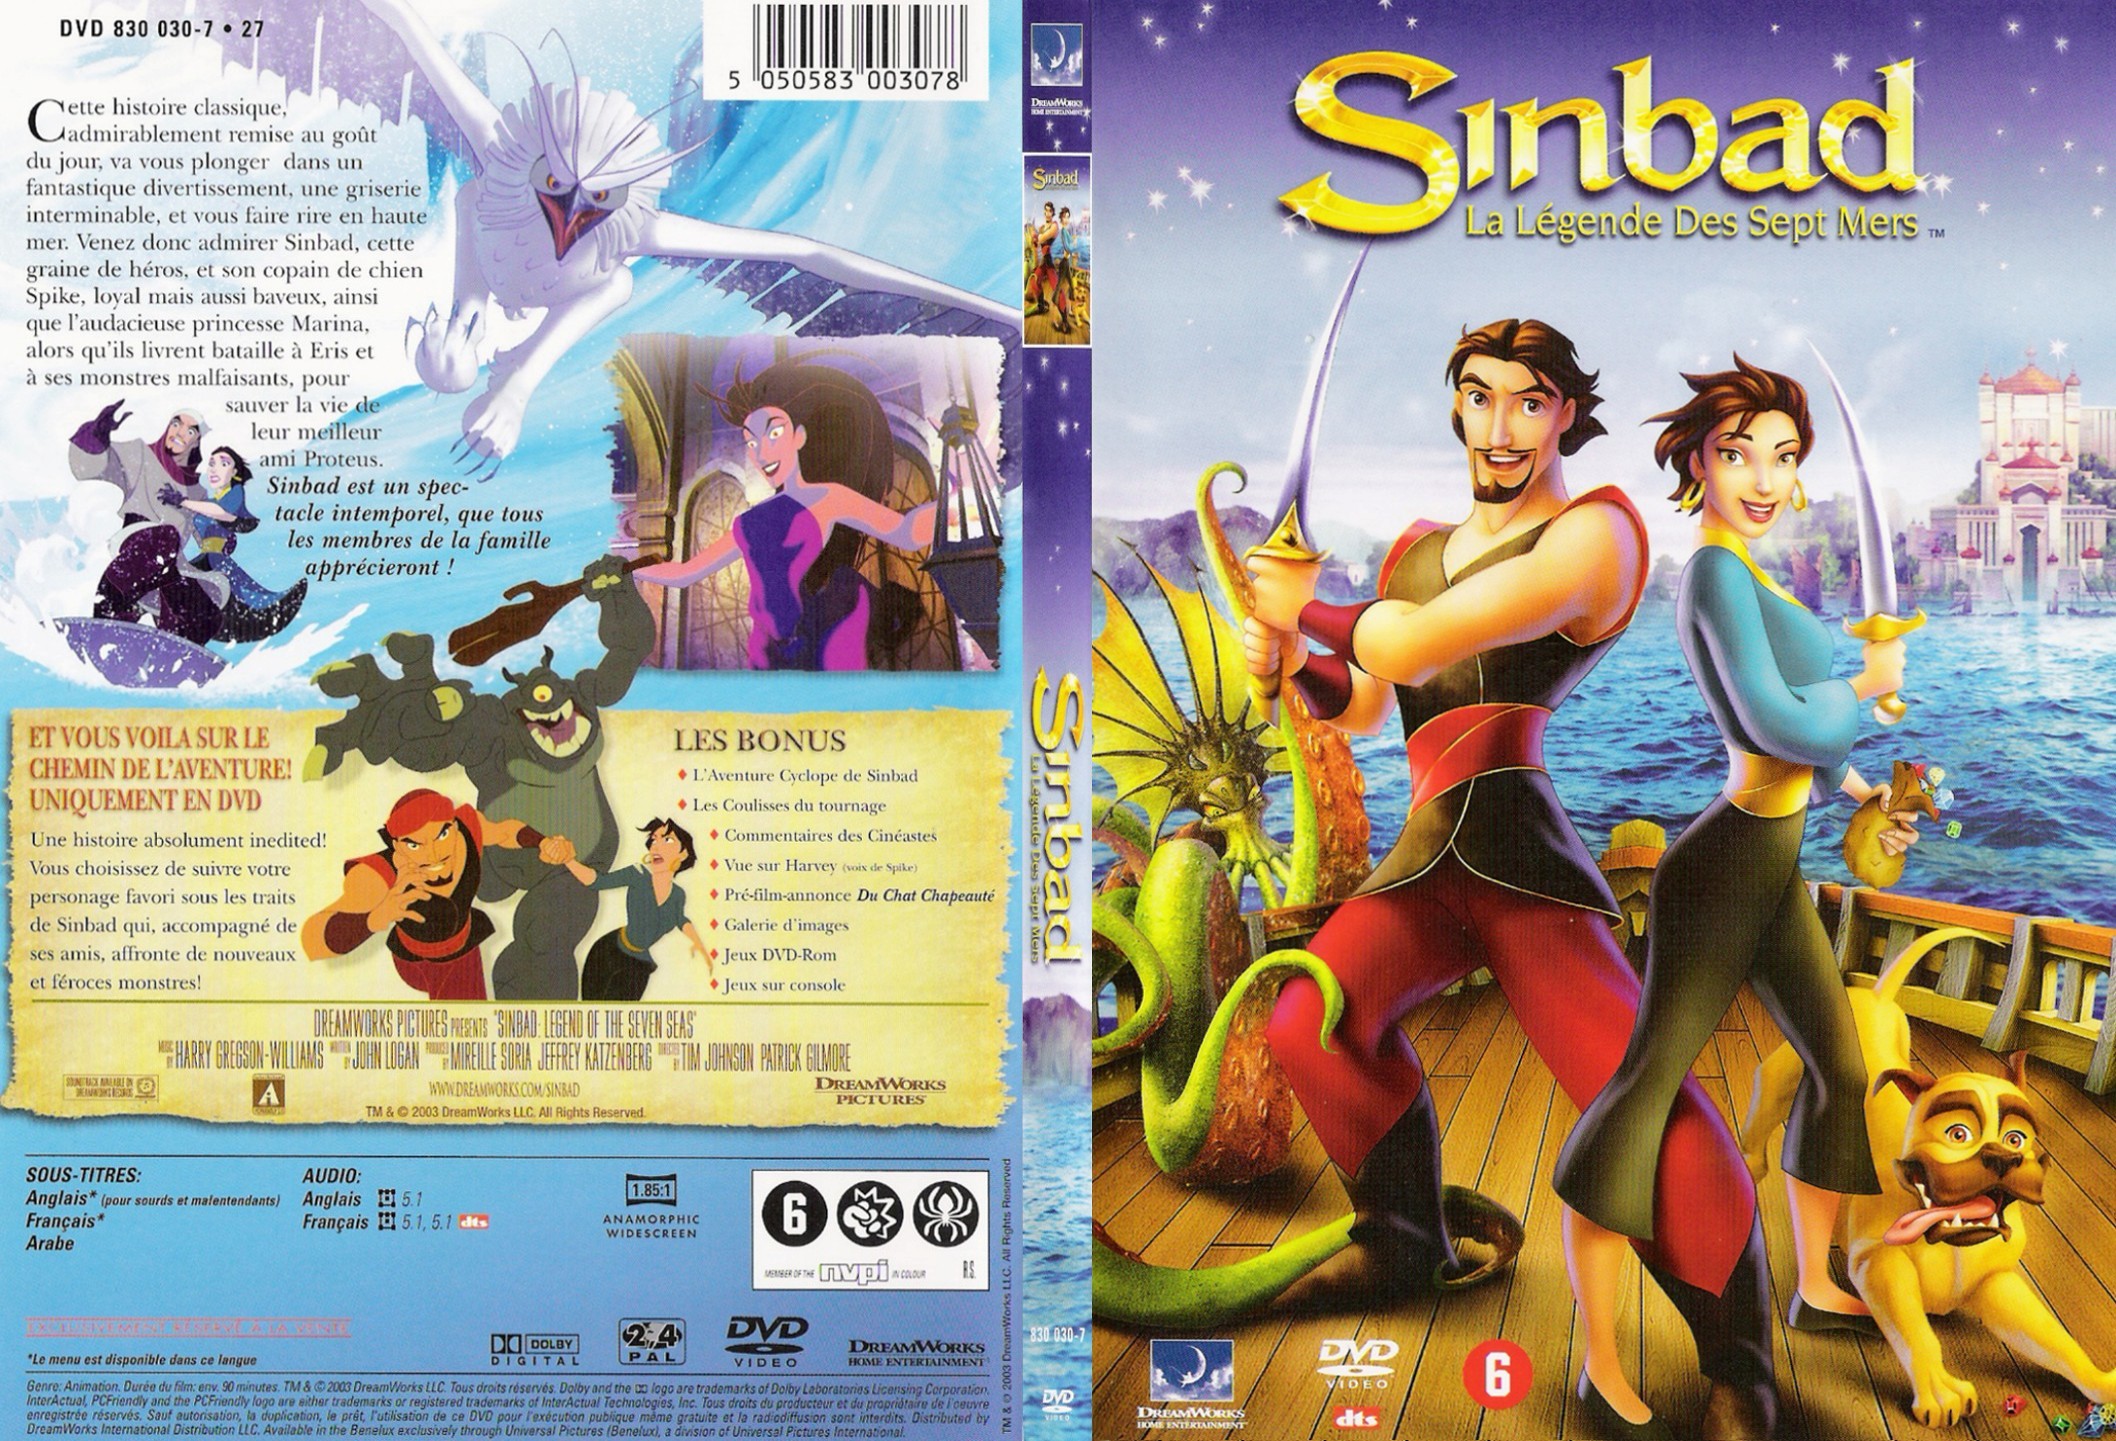 Jaquette DVD Sinbad la lgende des 7 mers - SLIM